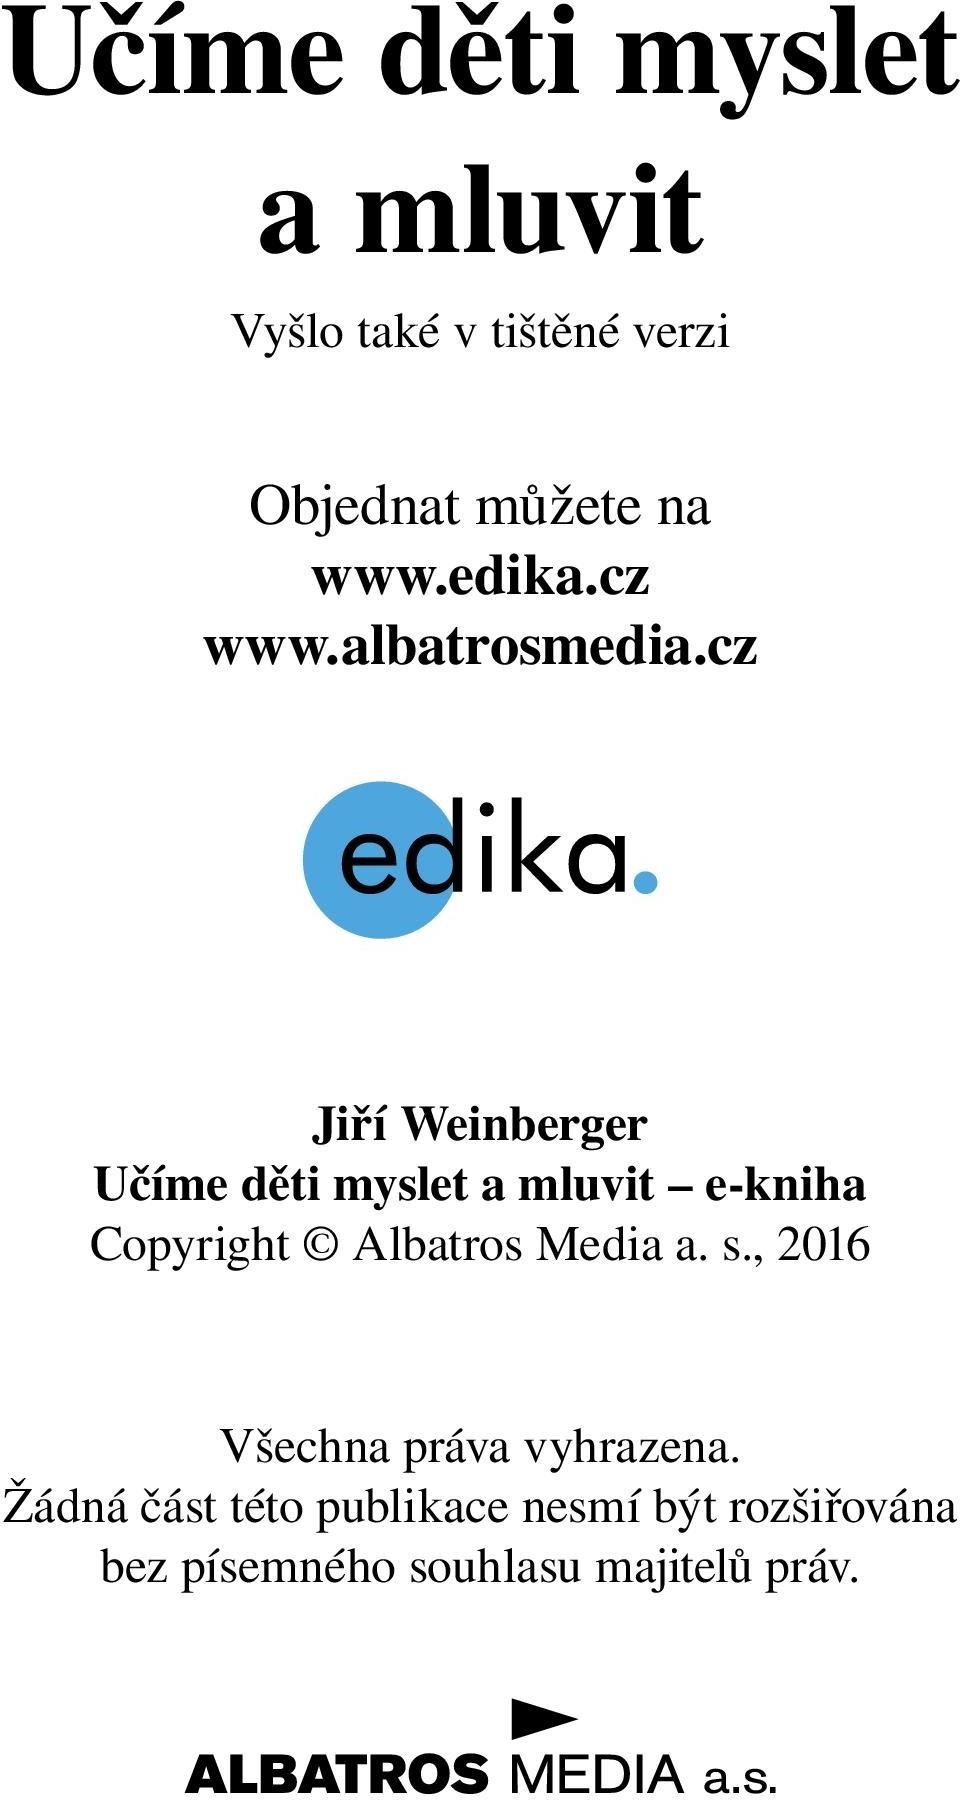 cz Jiří Weinberger Učíme děti myslet a mluvit e-kniha Copyright Albatros